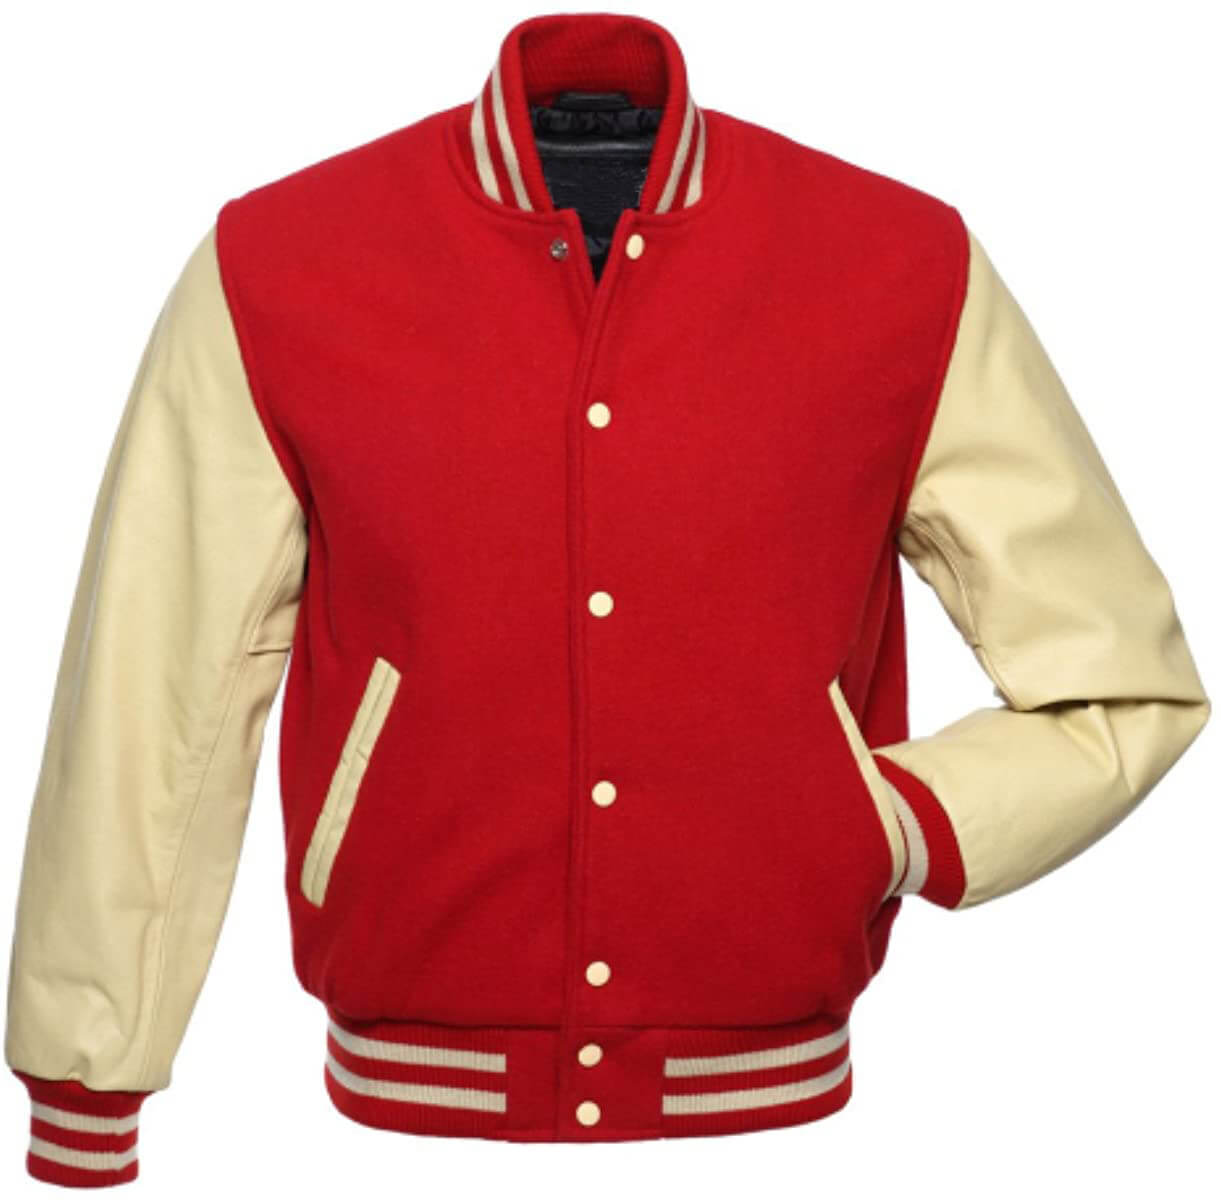 Maker of Jacket Varsity Jackets Red and Cream Baseball